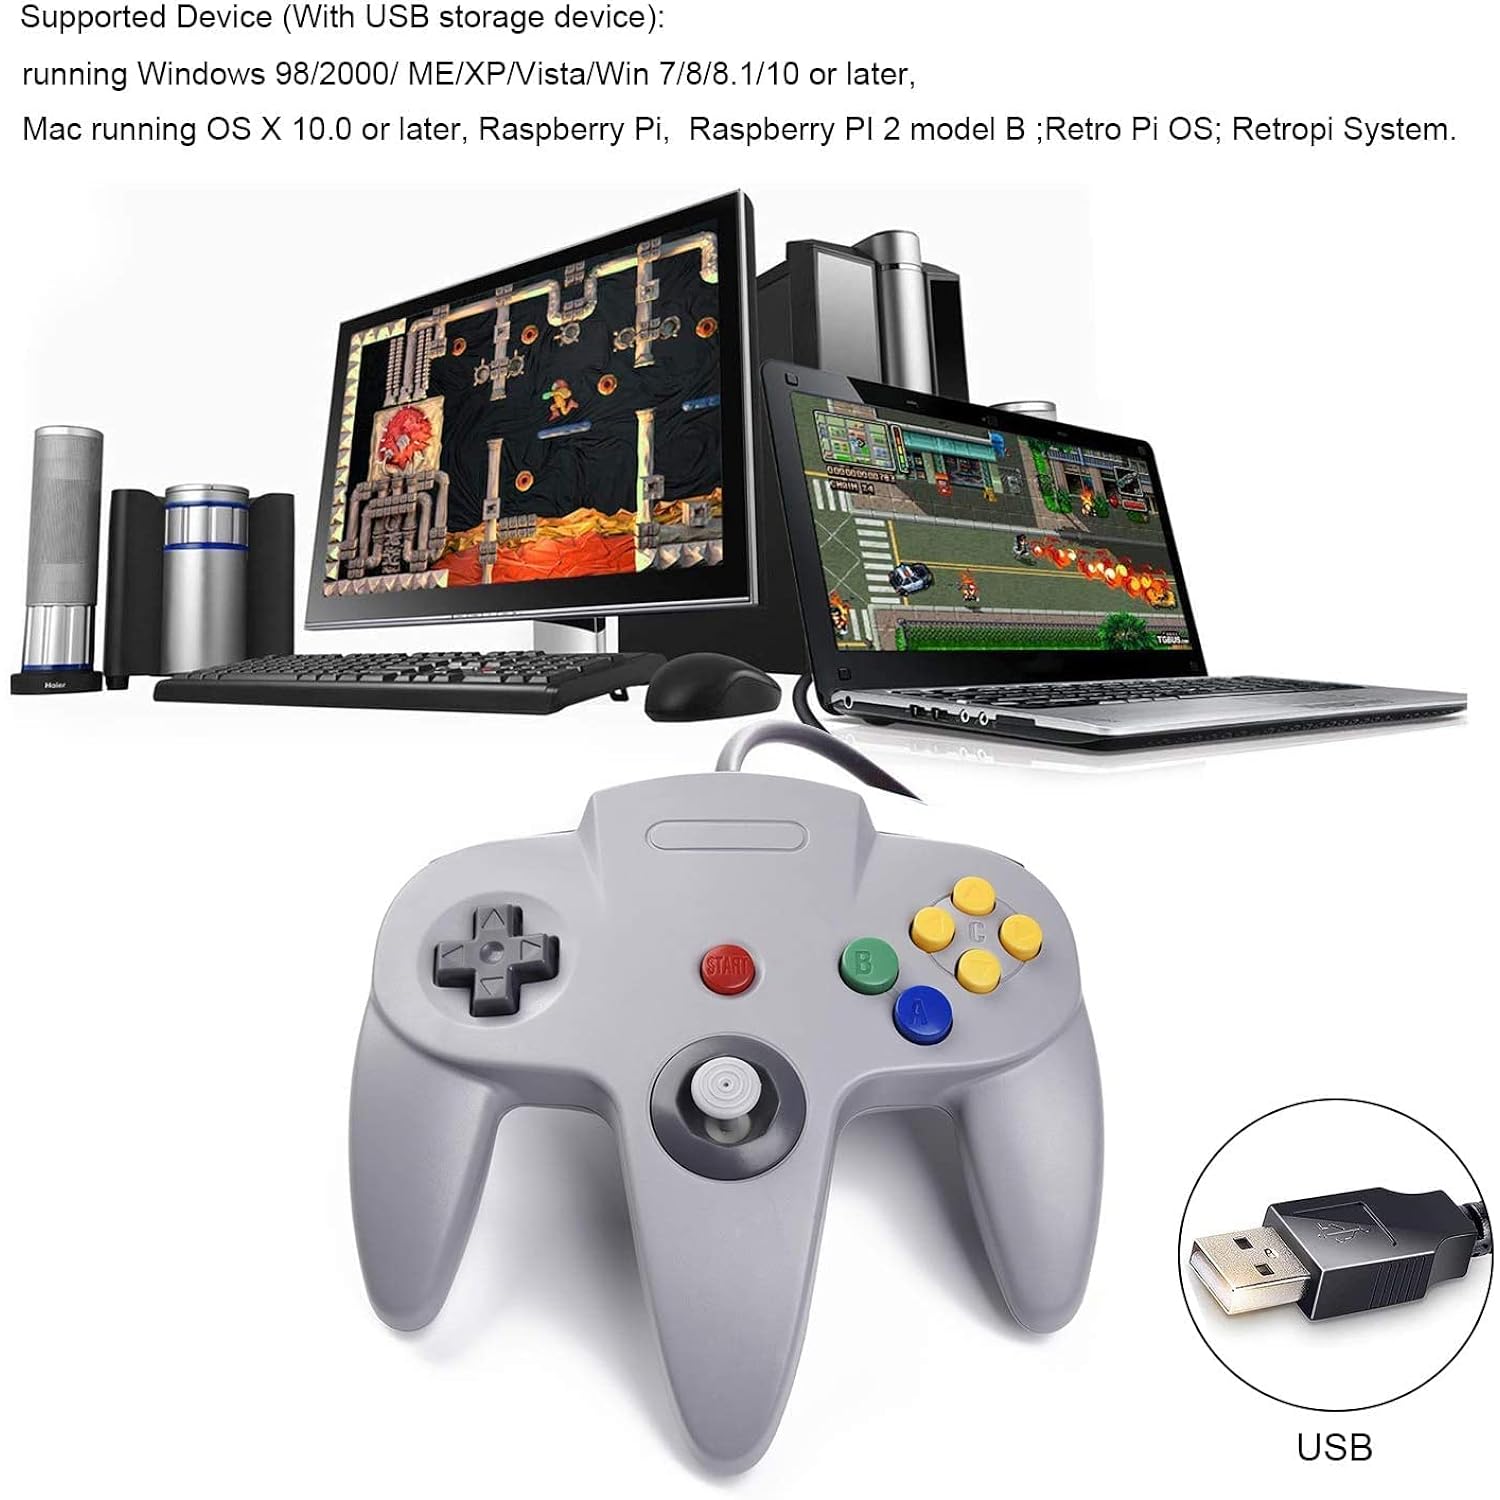 thinkstar 2 Pack Usb Wired N64 Controller, Classic N64 Pc Gamepad Joystick Controller For Windows Pc Mac Linux Raspberry Pi 3 (Black/Gray)